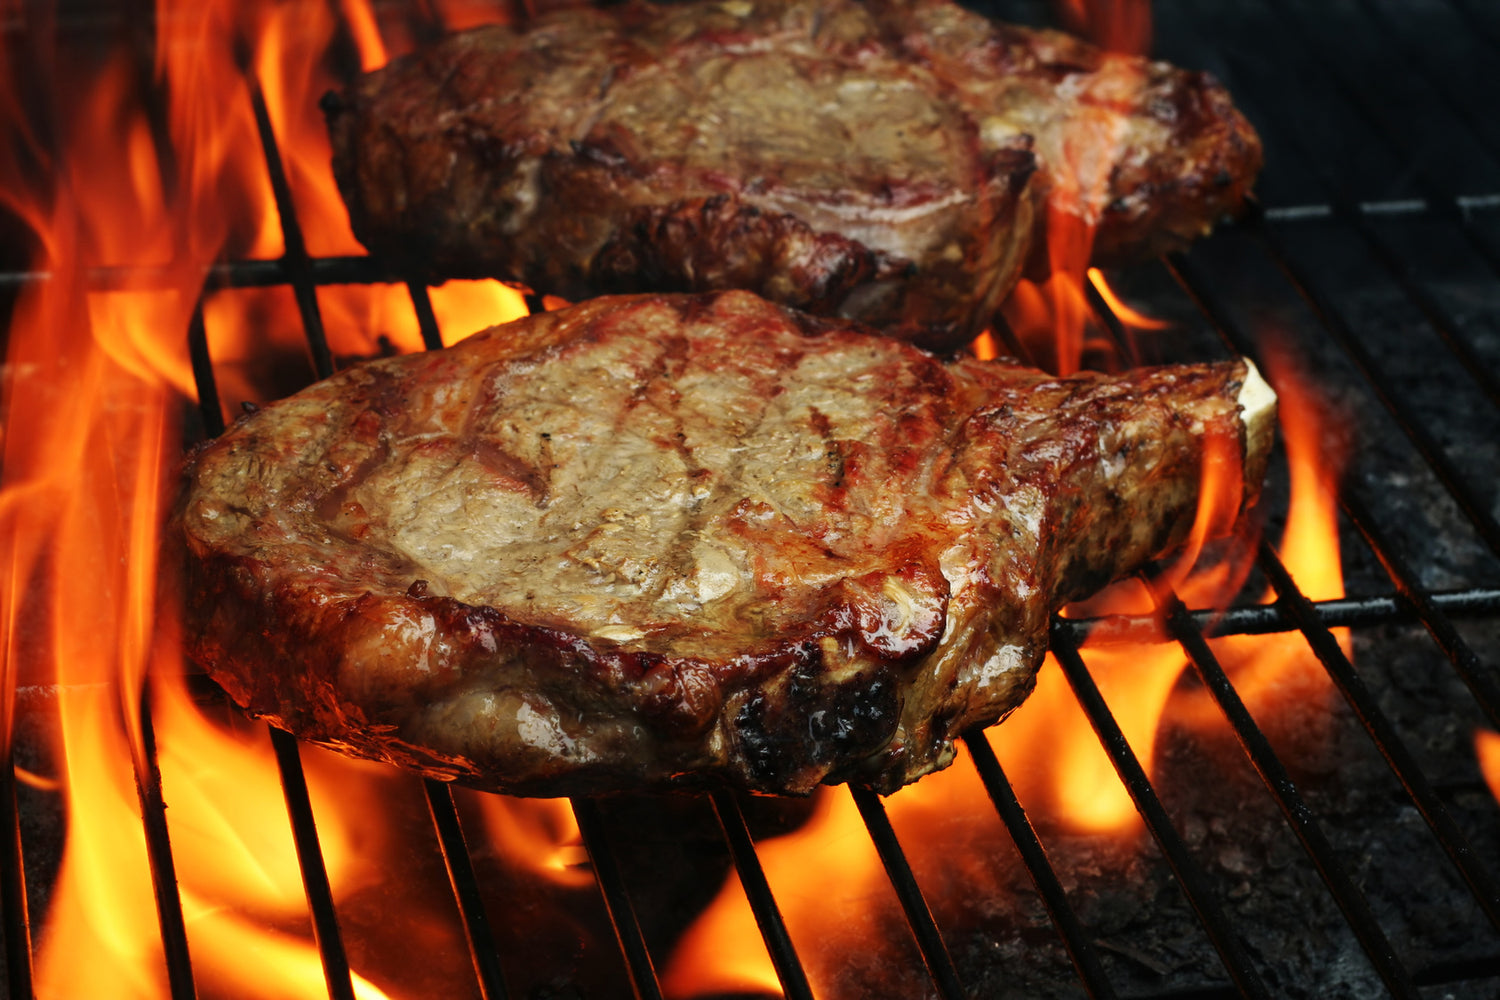 Meathead Talks: How to Grill A Steak Like A Pro